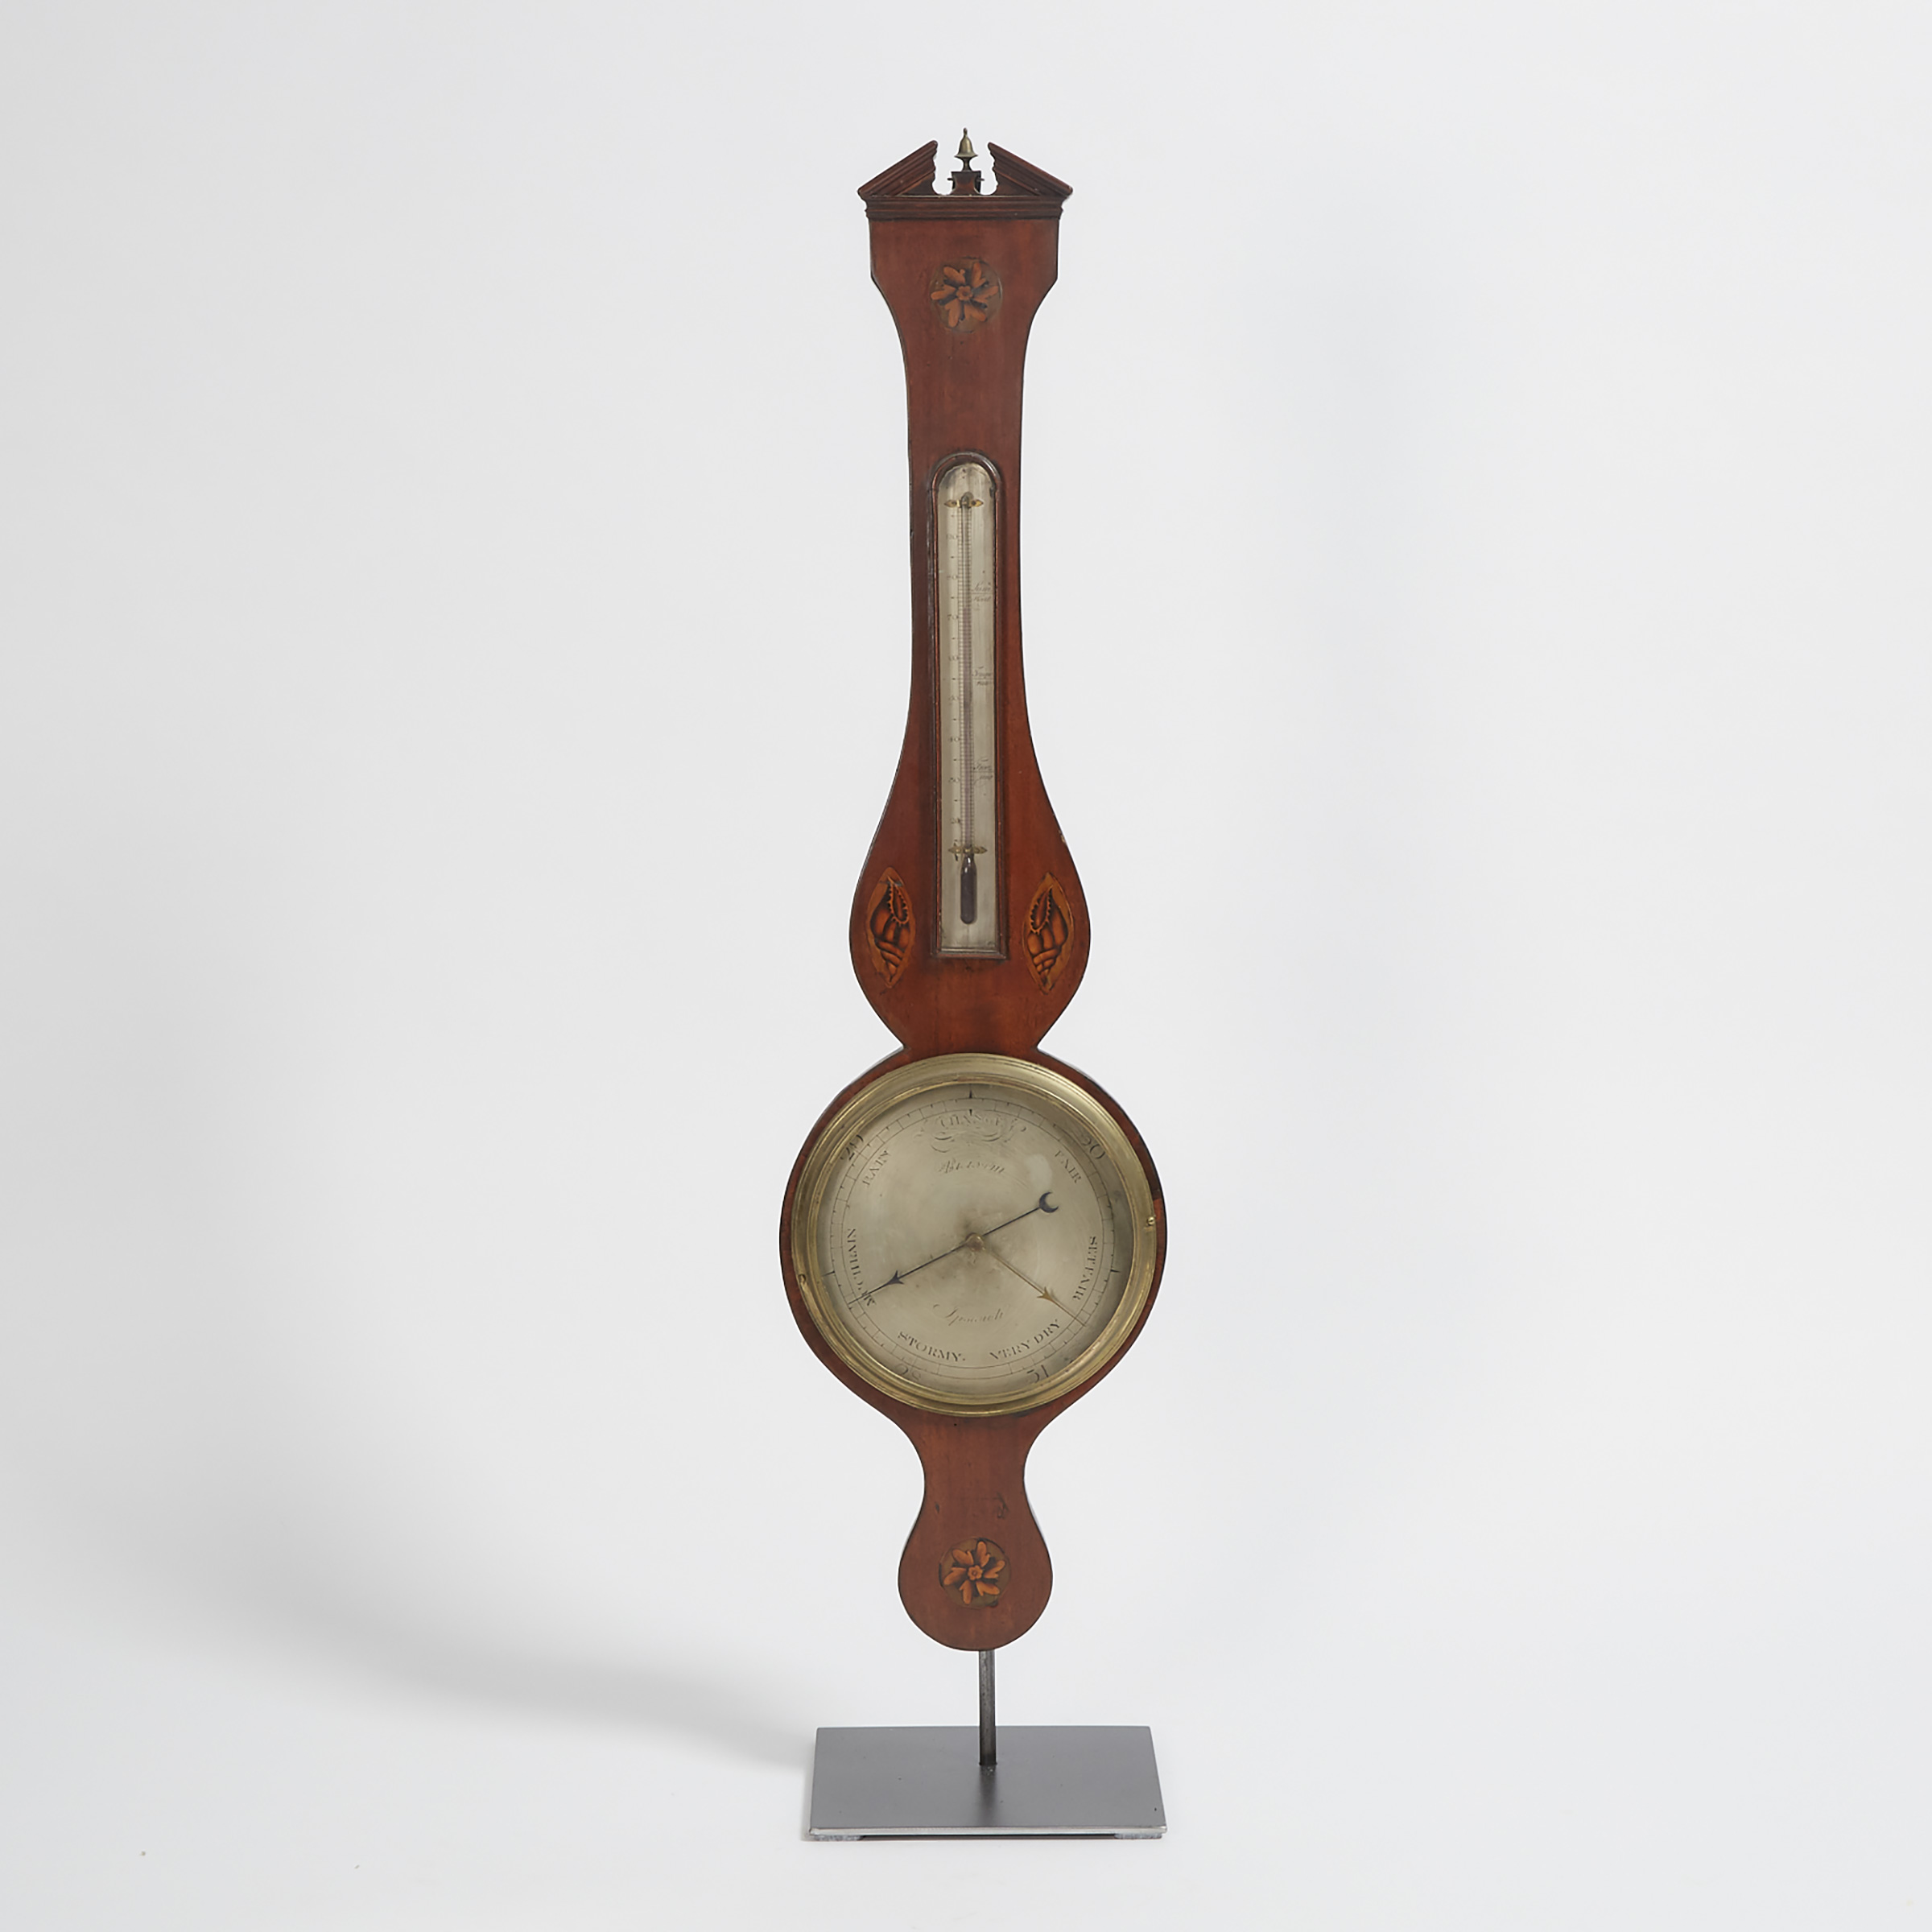 English Inlaid Mahogany Wheel Barometer, George Bianchi, Ipswich, early-mid 19th century